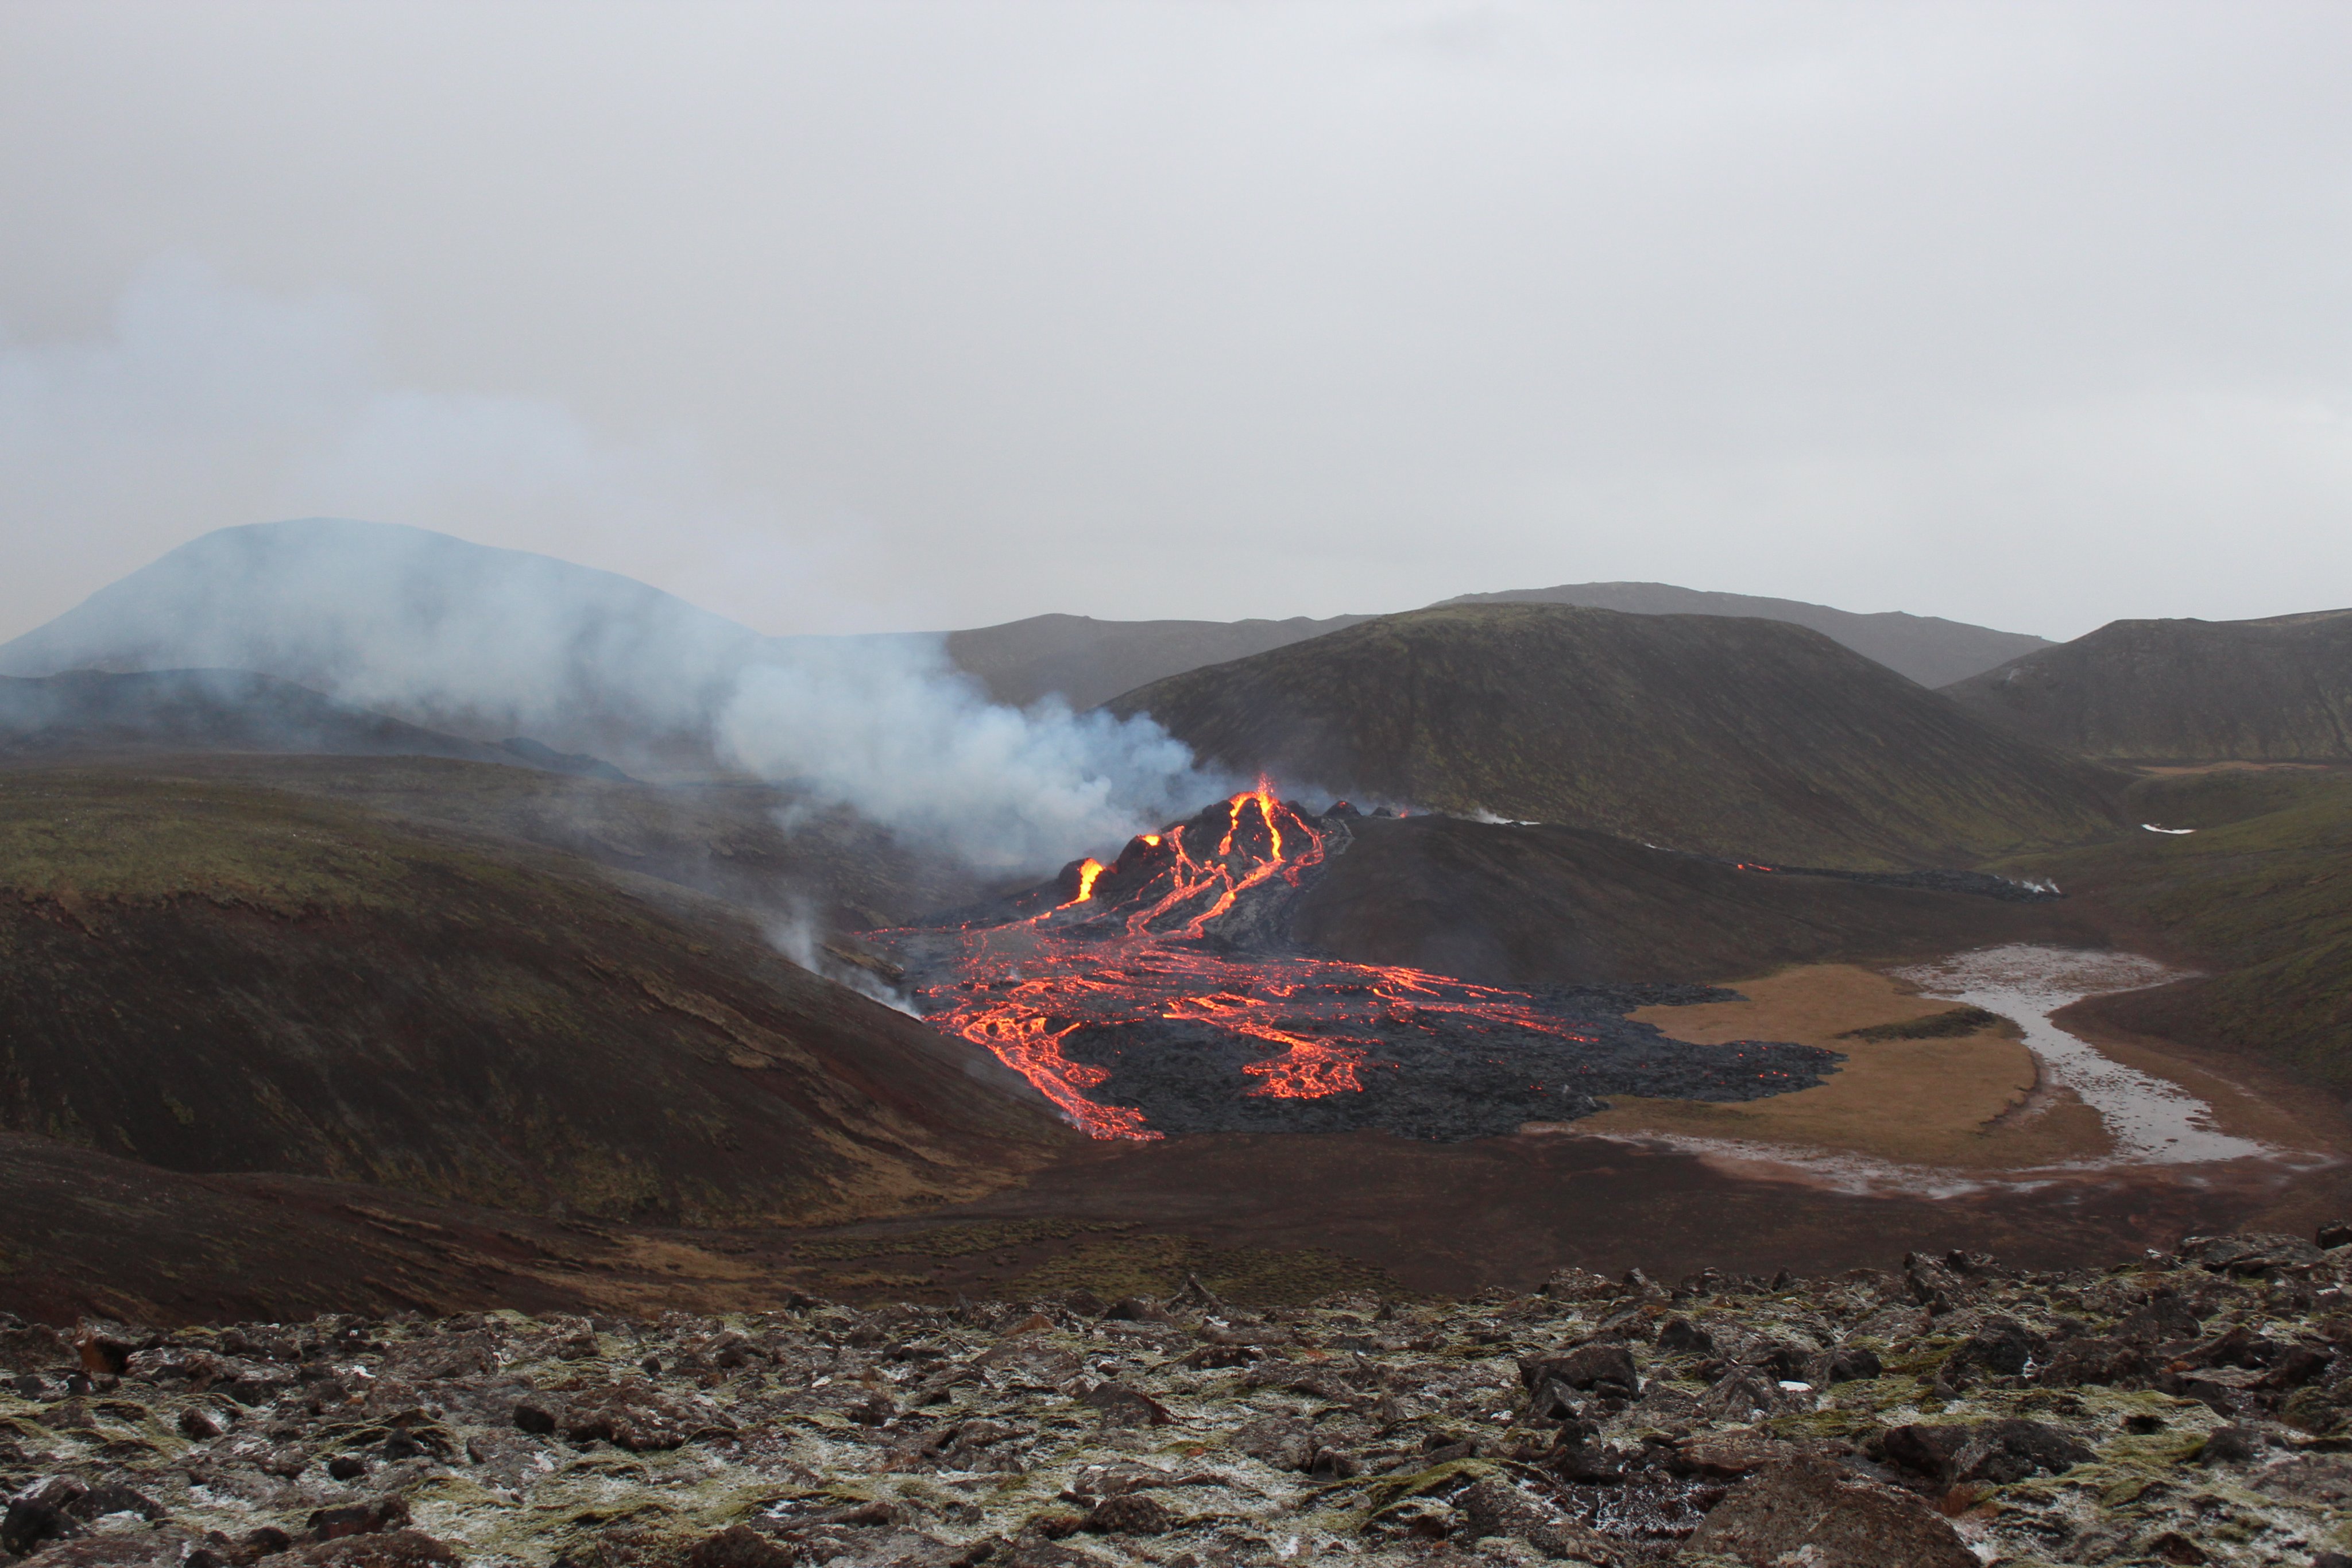  Eruption  on Iceland  s Reykjanes Peninsula follows over 